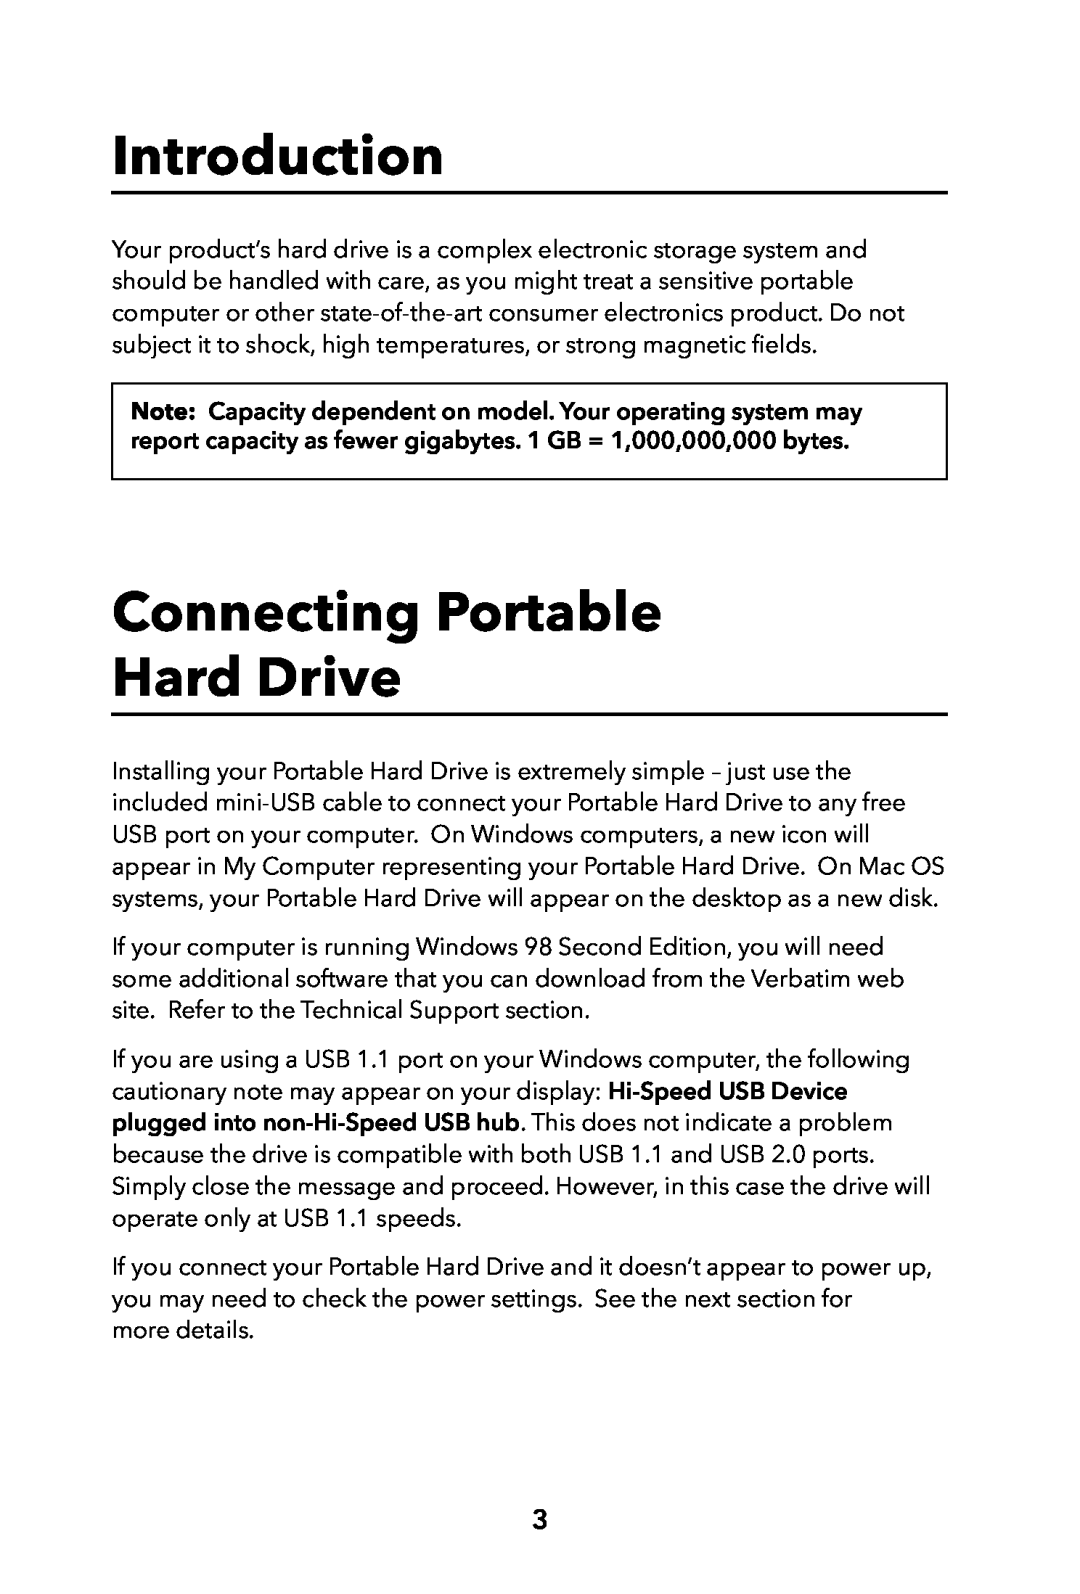 Verbatim Portable Hard Drive USB 2.0 manual Introduction, Connecting Portable Hard Drive 